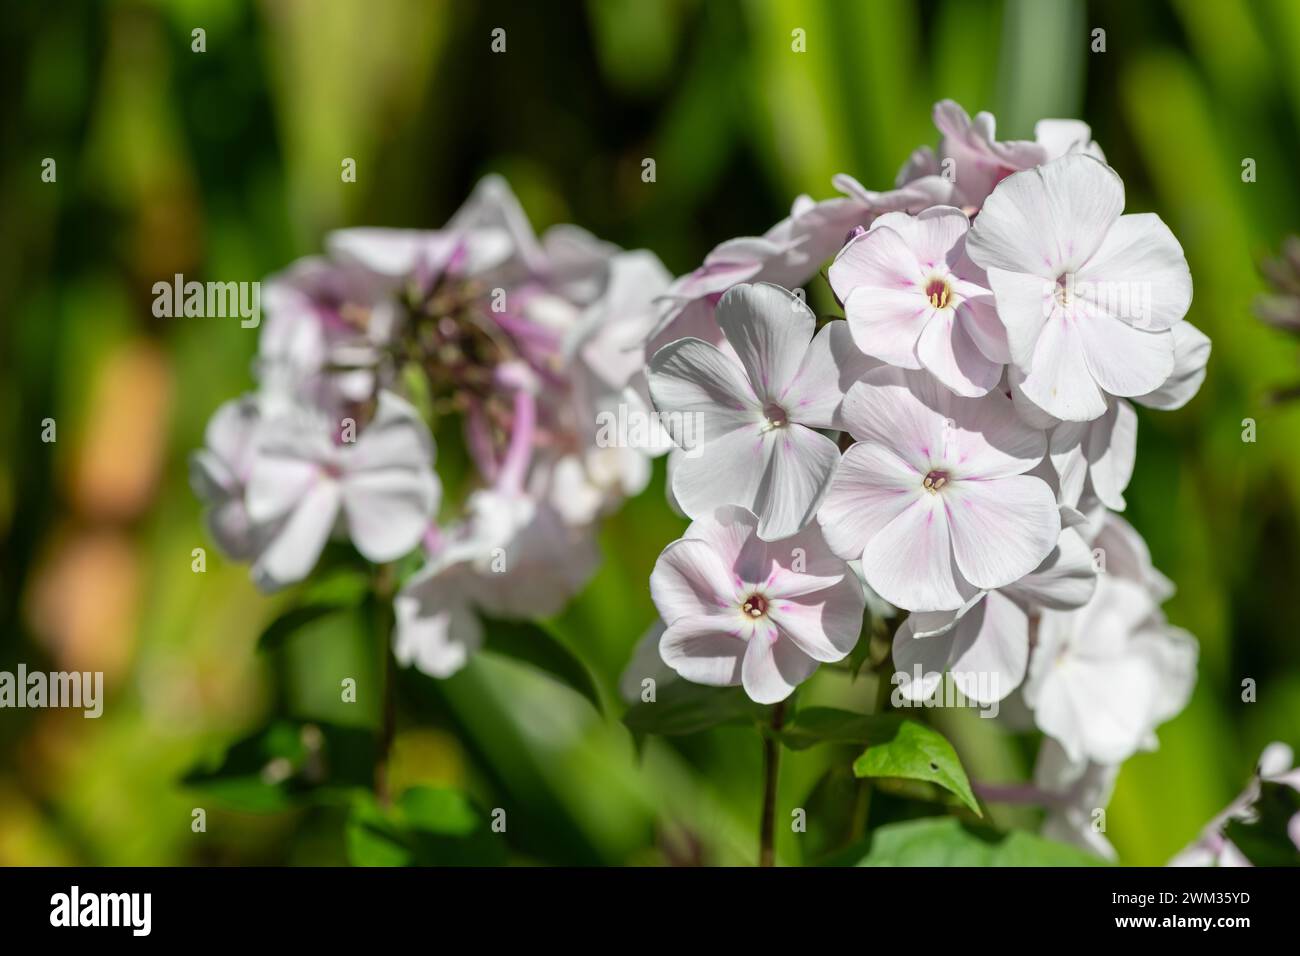 Close up of white garden phlox (phlox paniculata) flowers in bloom Stock Photo